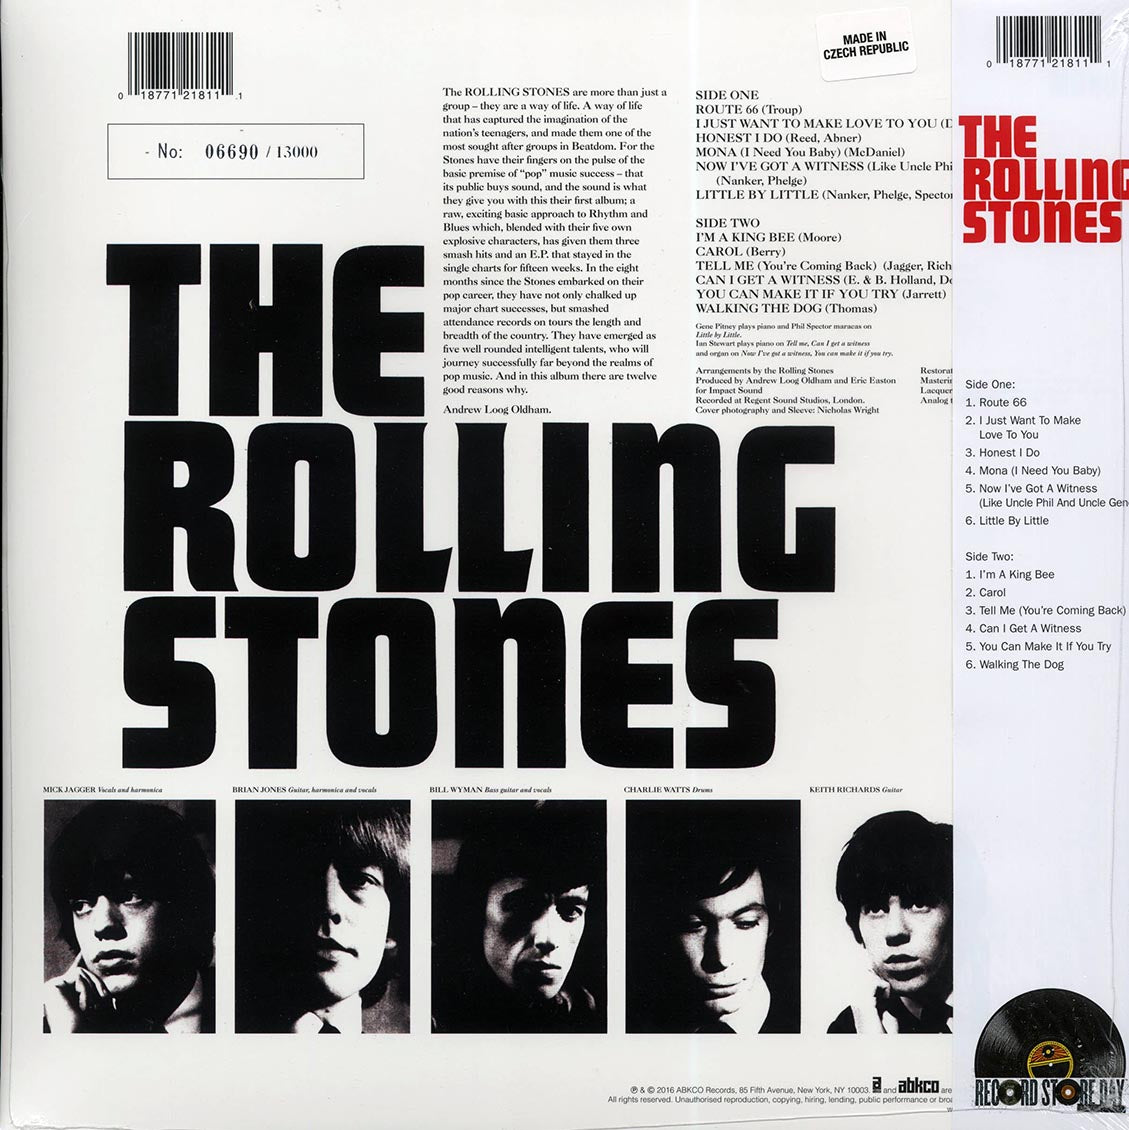 The Rolling Stones - The Rolling Stones (mono) (RSD 2024) (numbered ltd.ed.) (180g) (colored vinyl) - Vinyl LP, LP